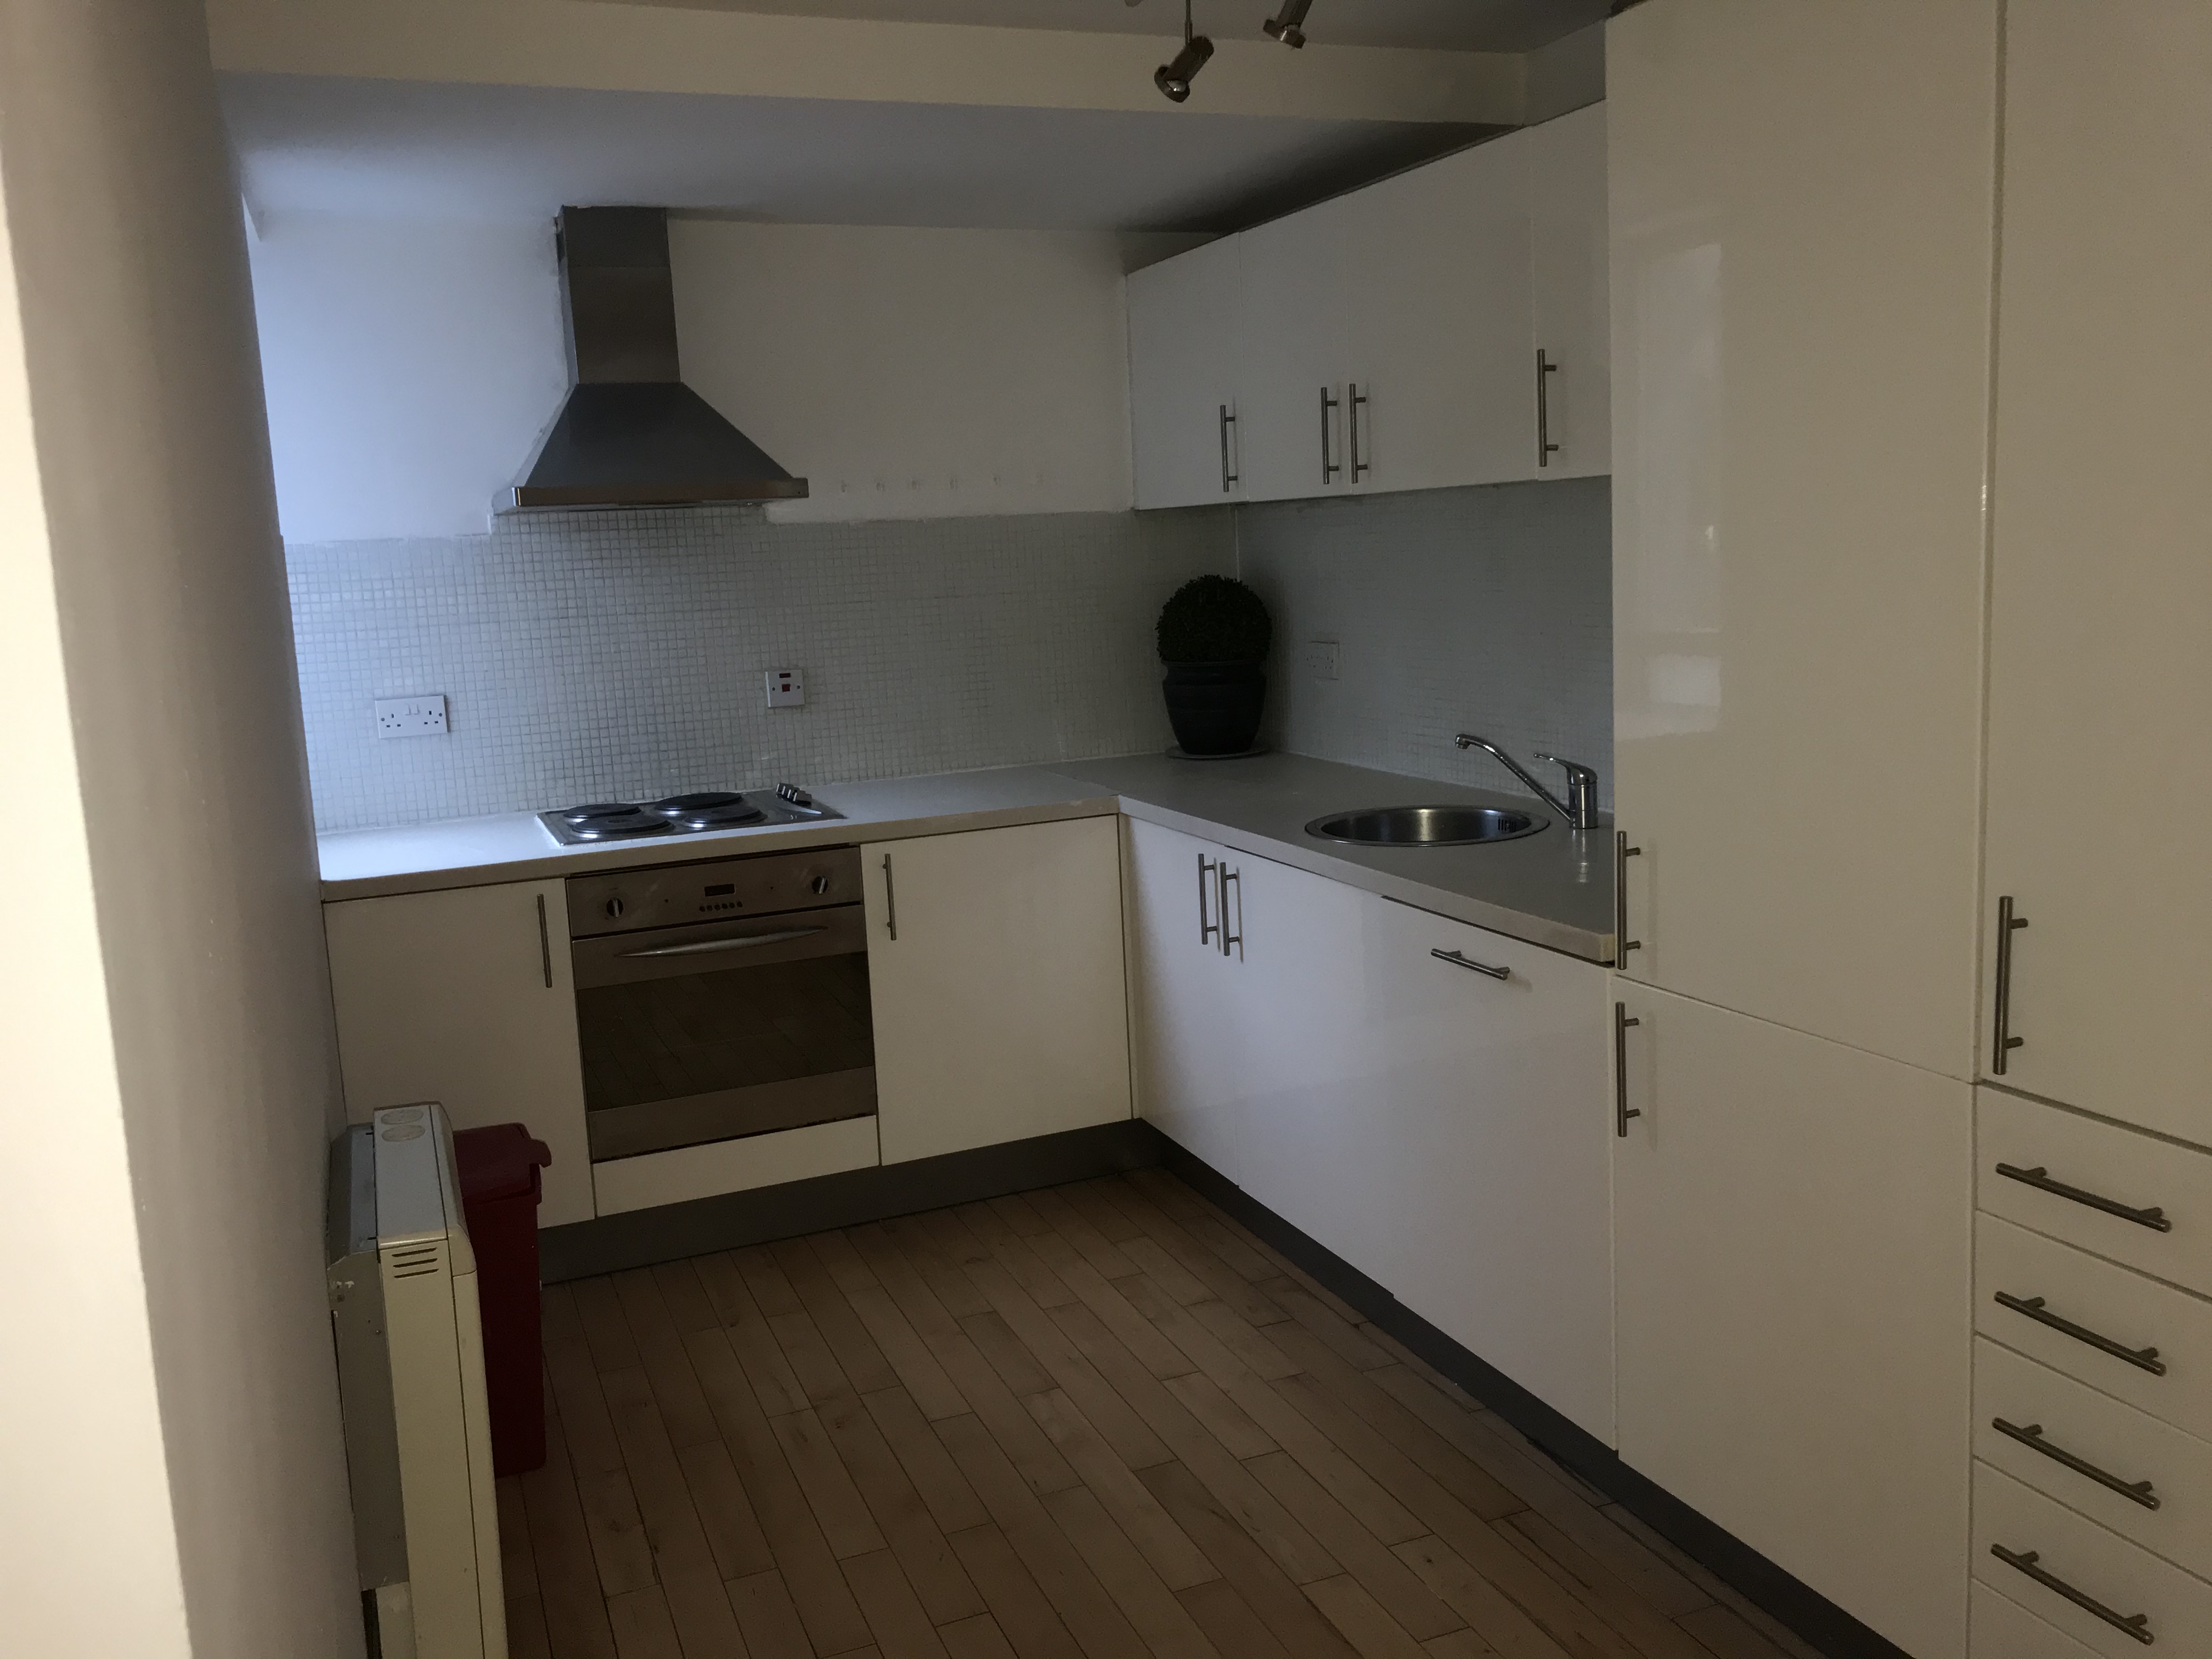 2 Bedroom Flat to rent in Salford - Mashroom